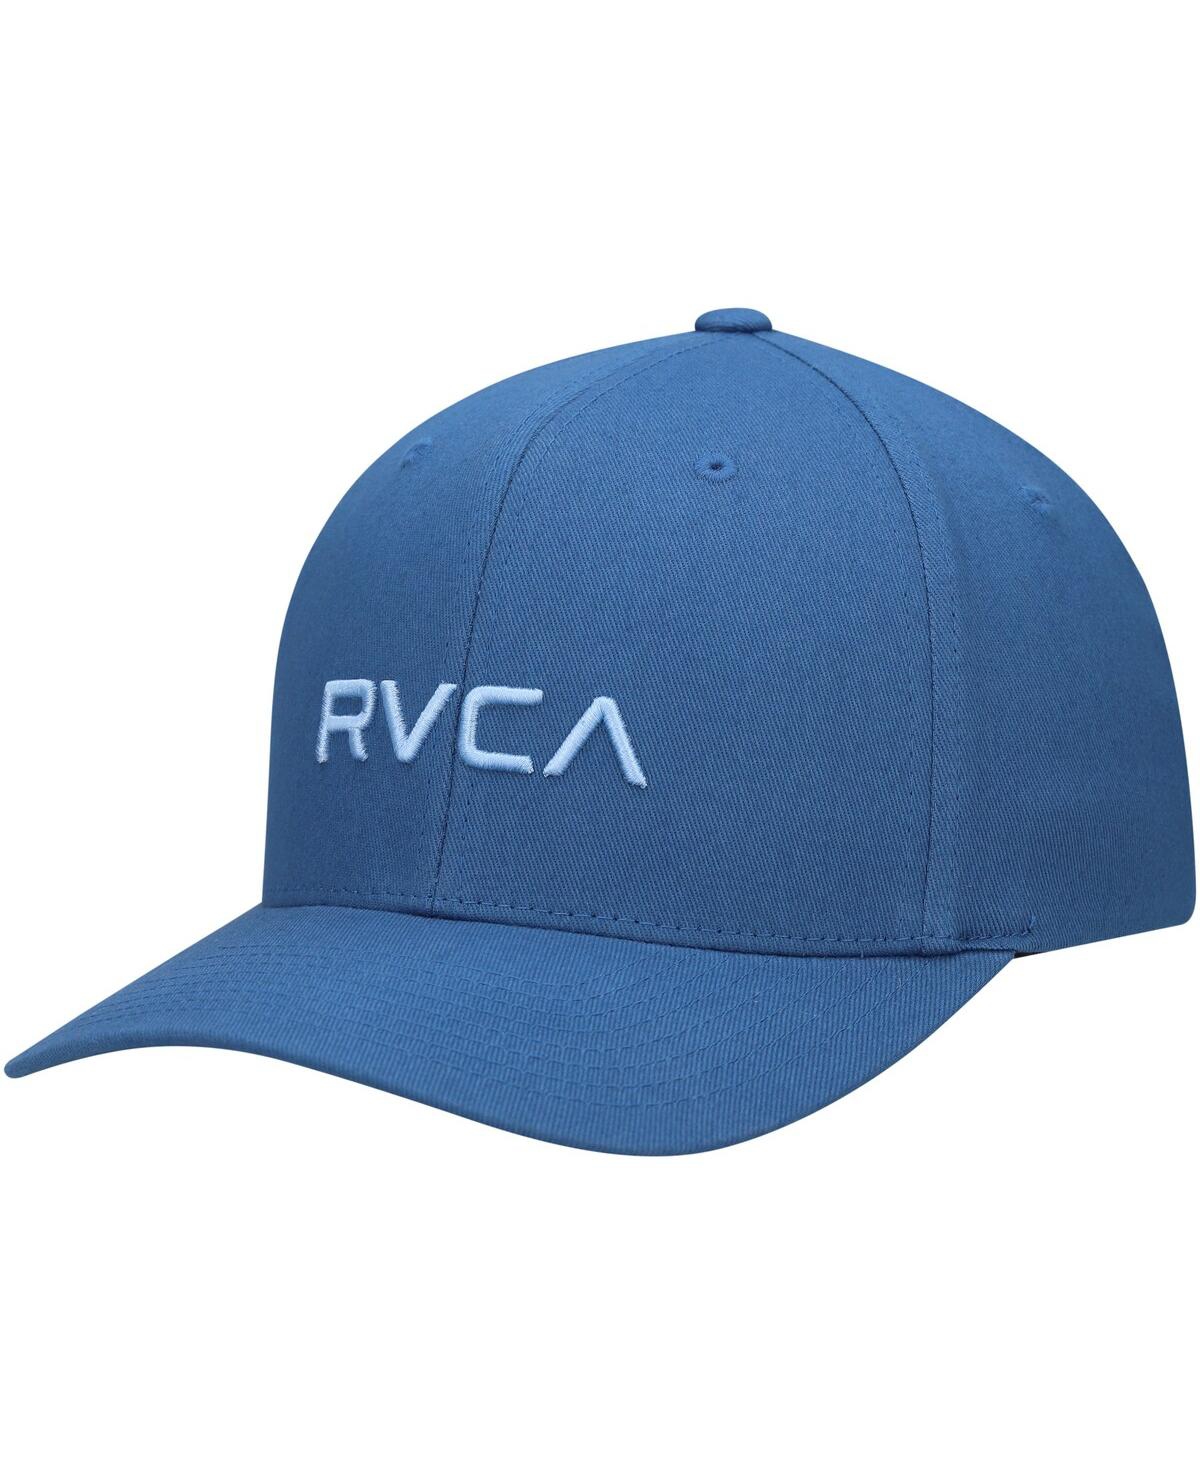 Men's Rvca Blue Logo Flex Hat - Blue